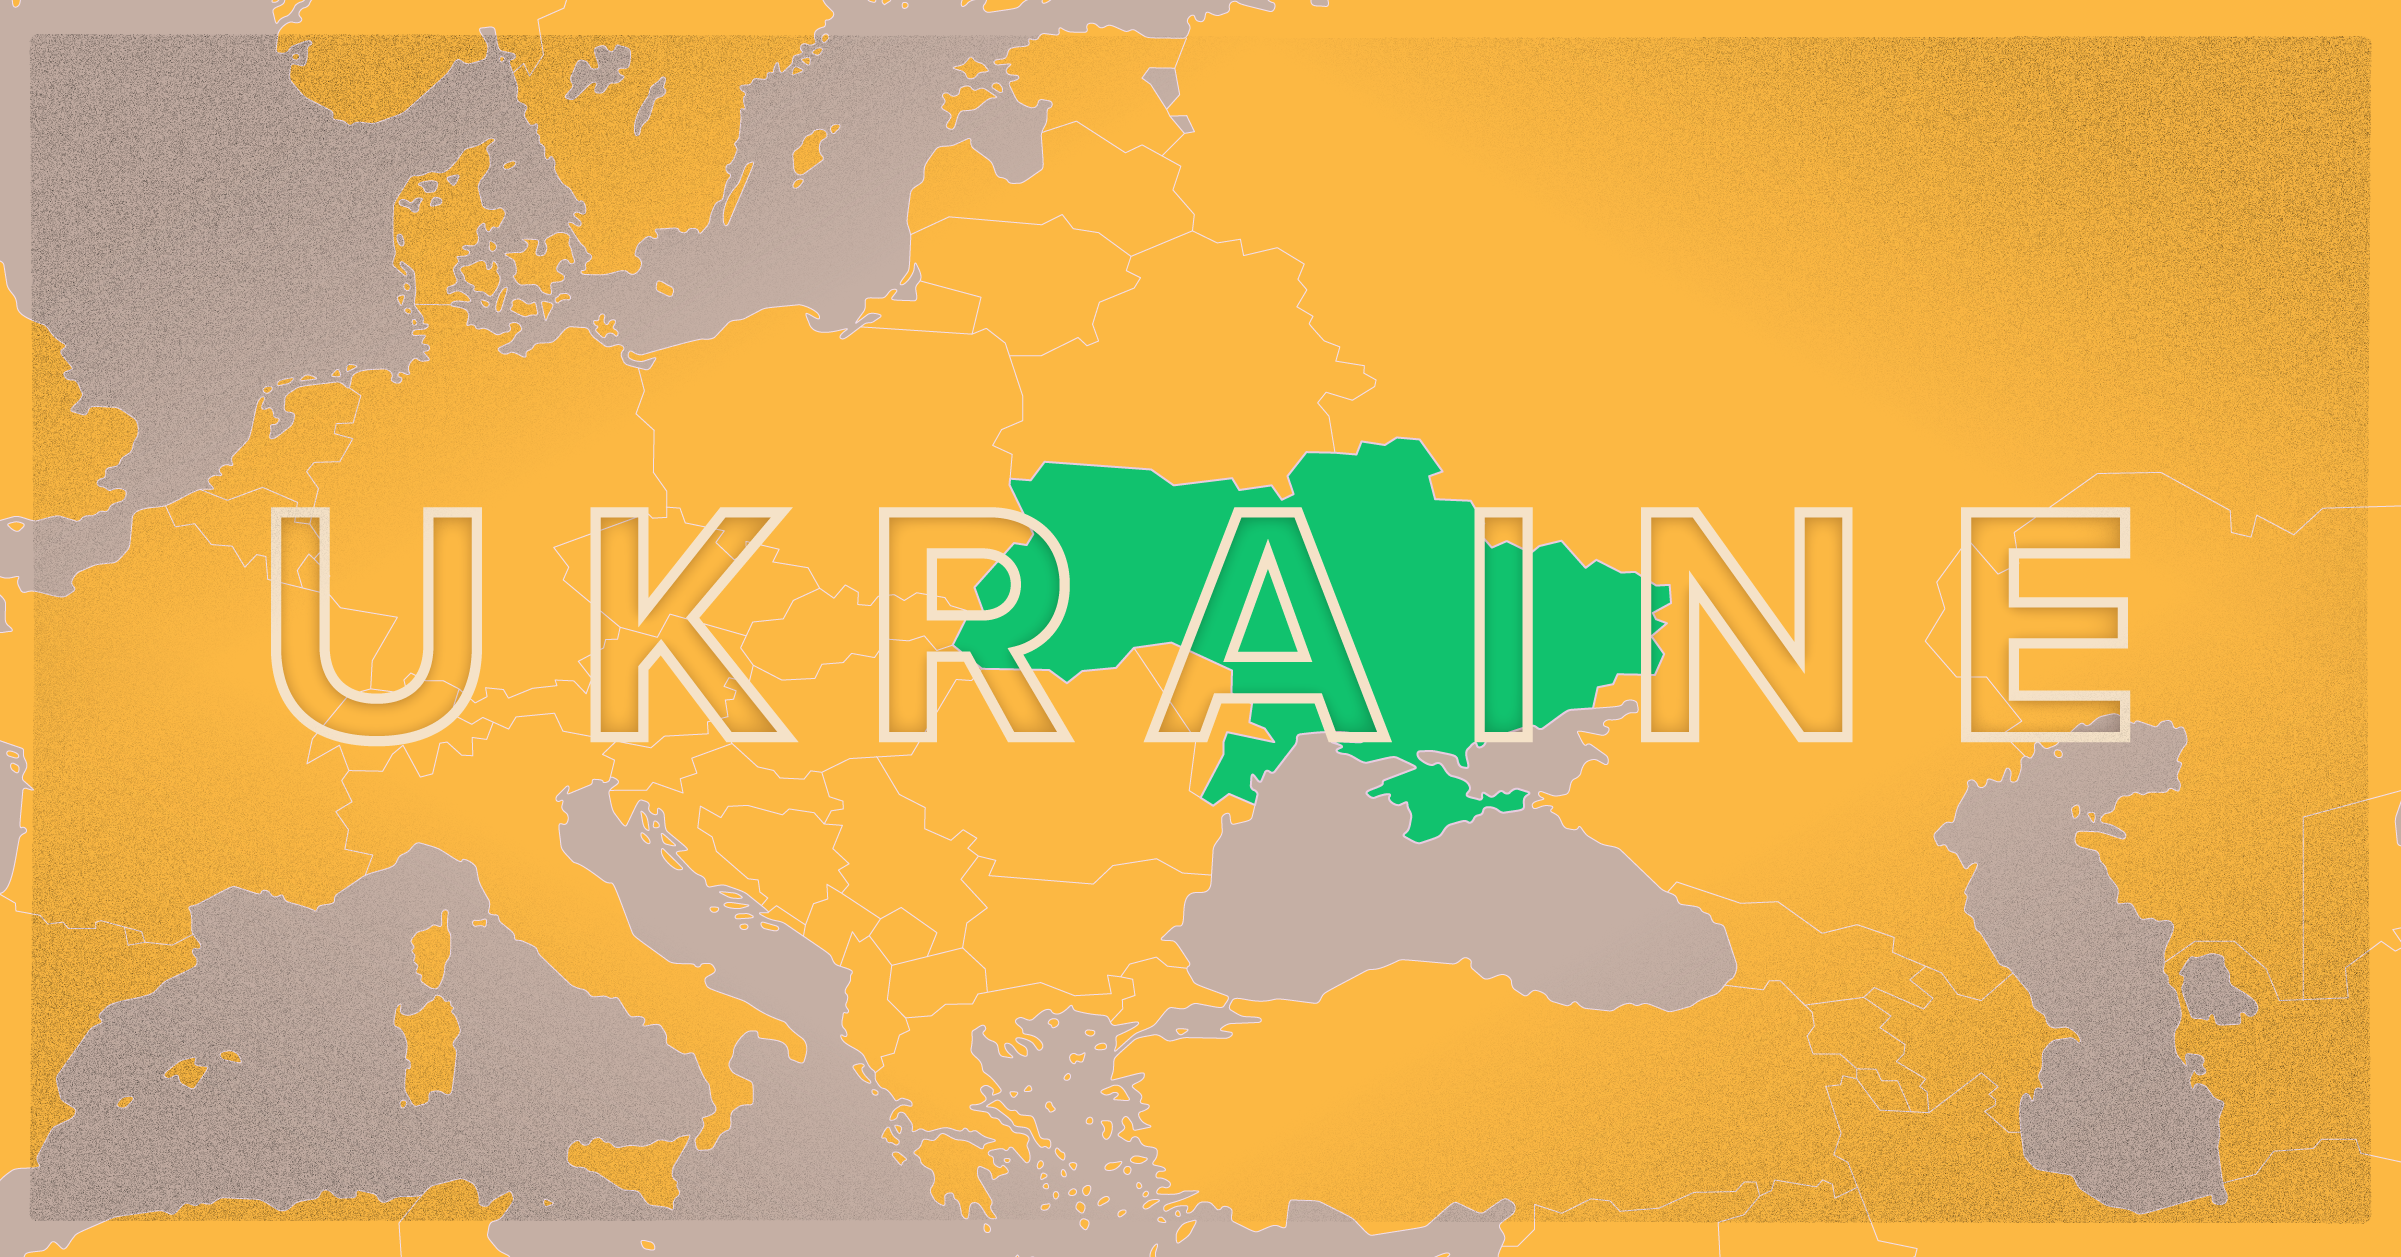 Tracking political attitudes around the ukraine crisis